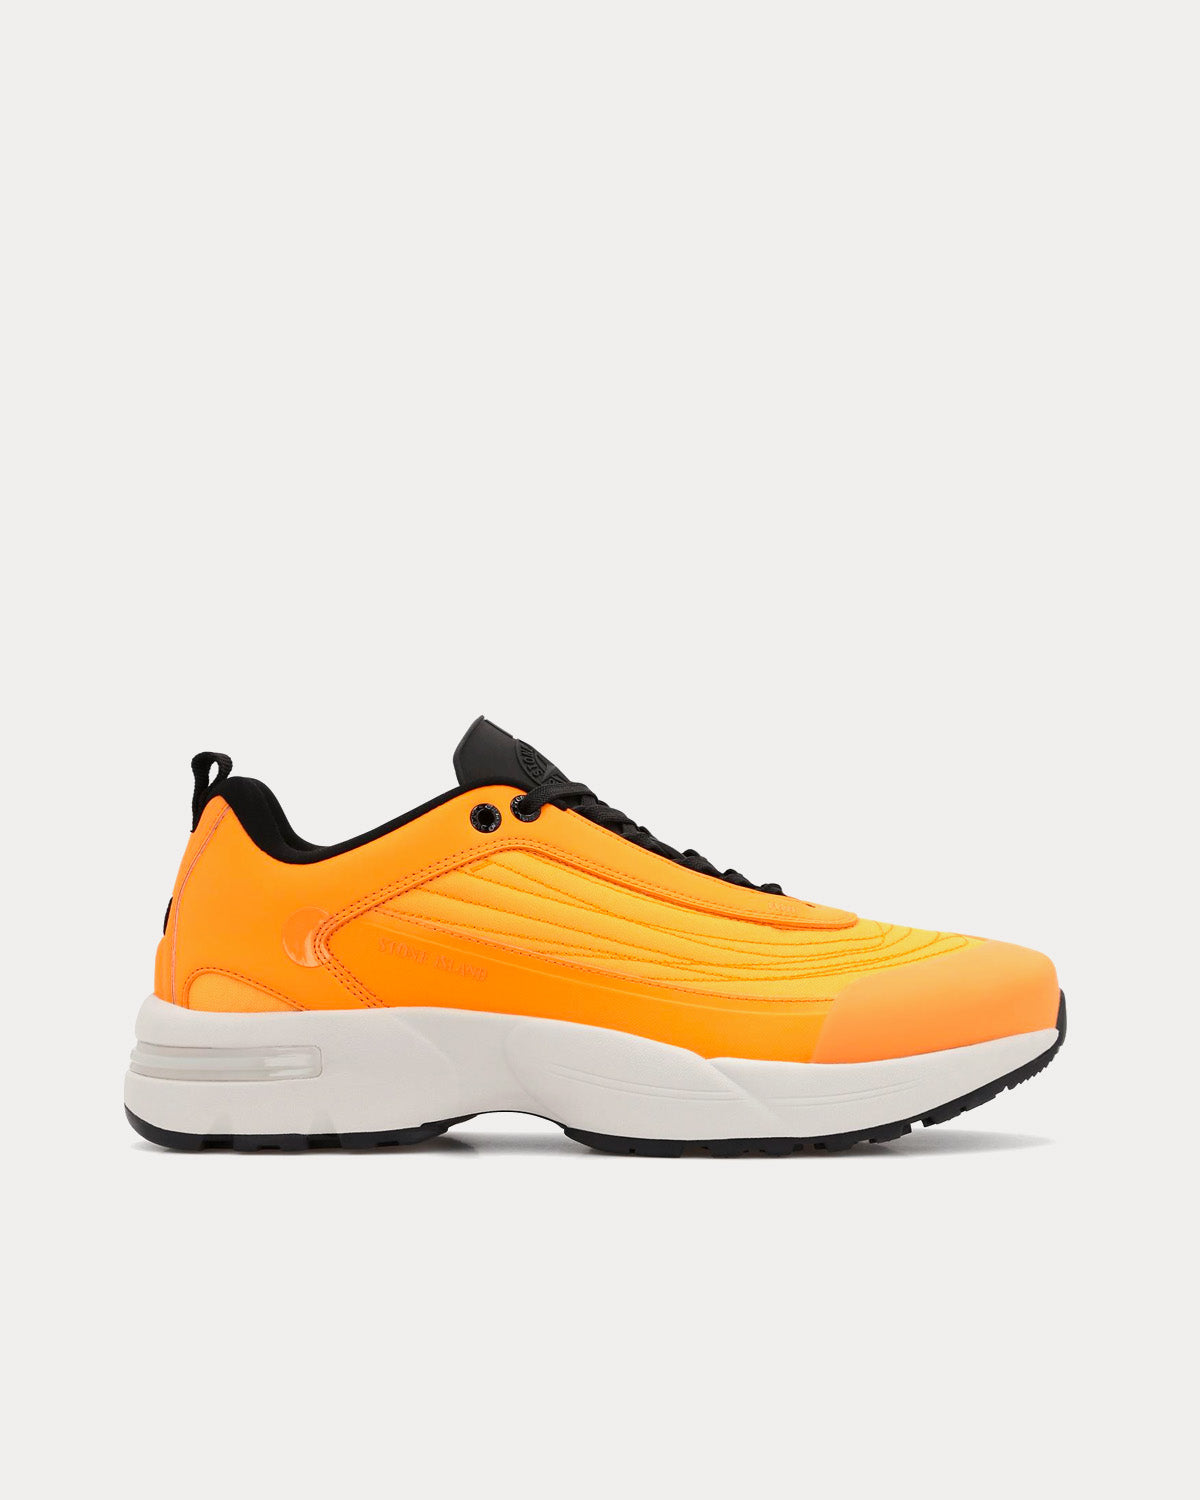 Stone Island - S0303 Orange Low Top Sneakers